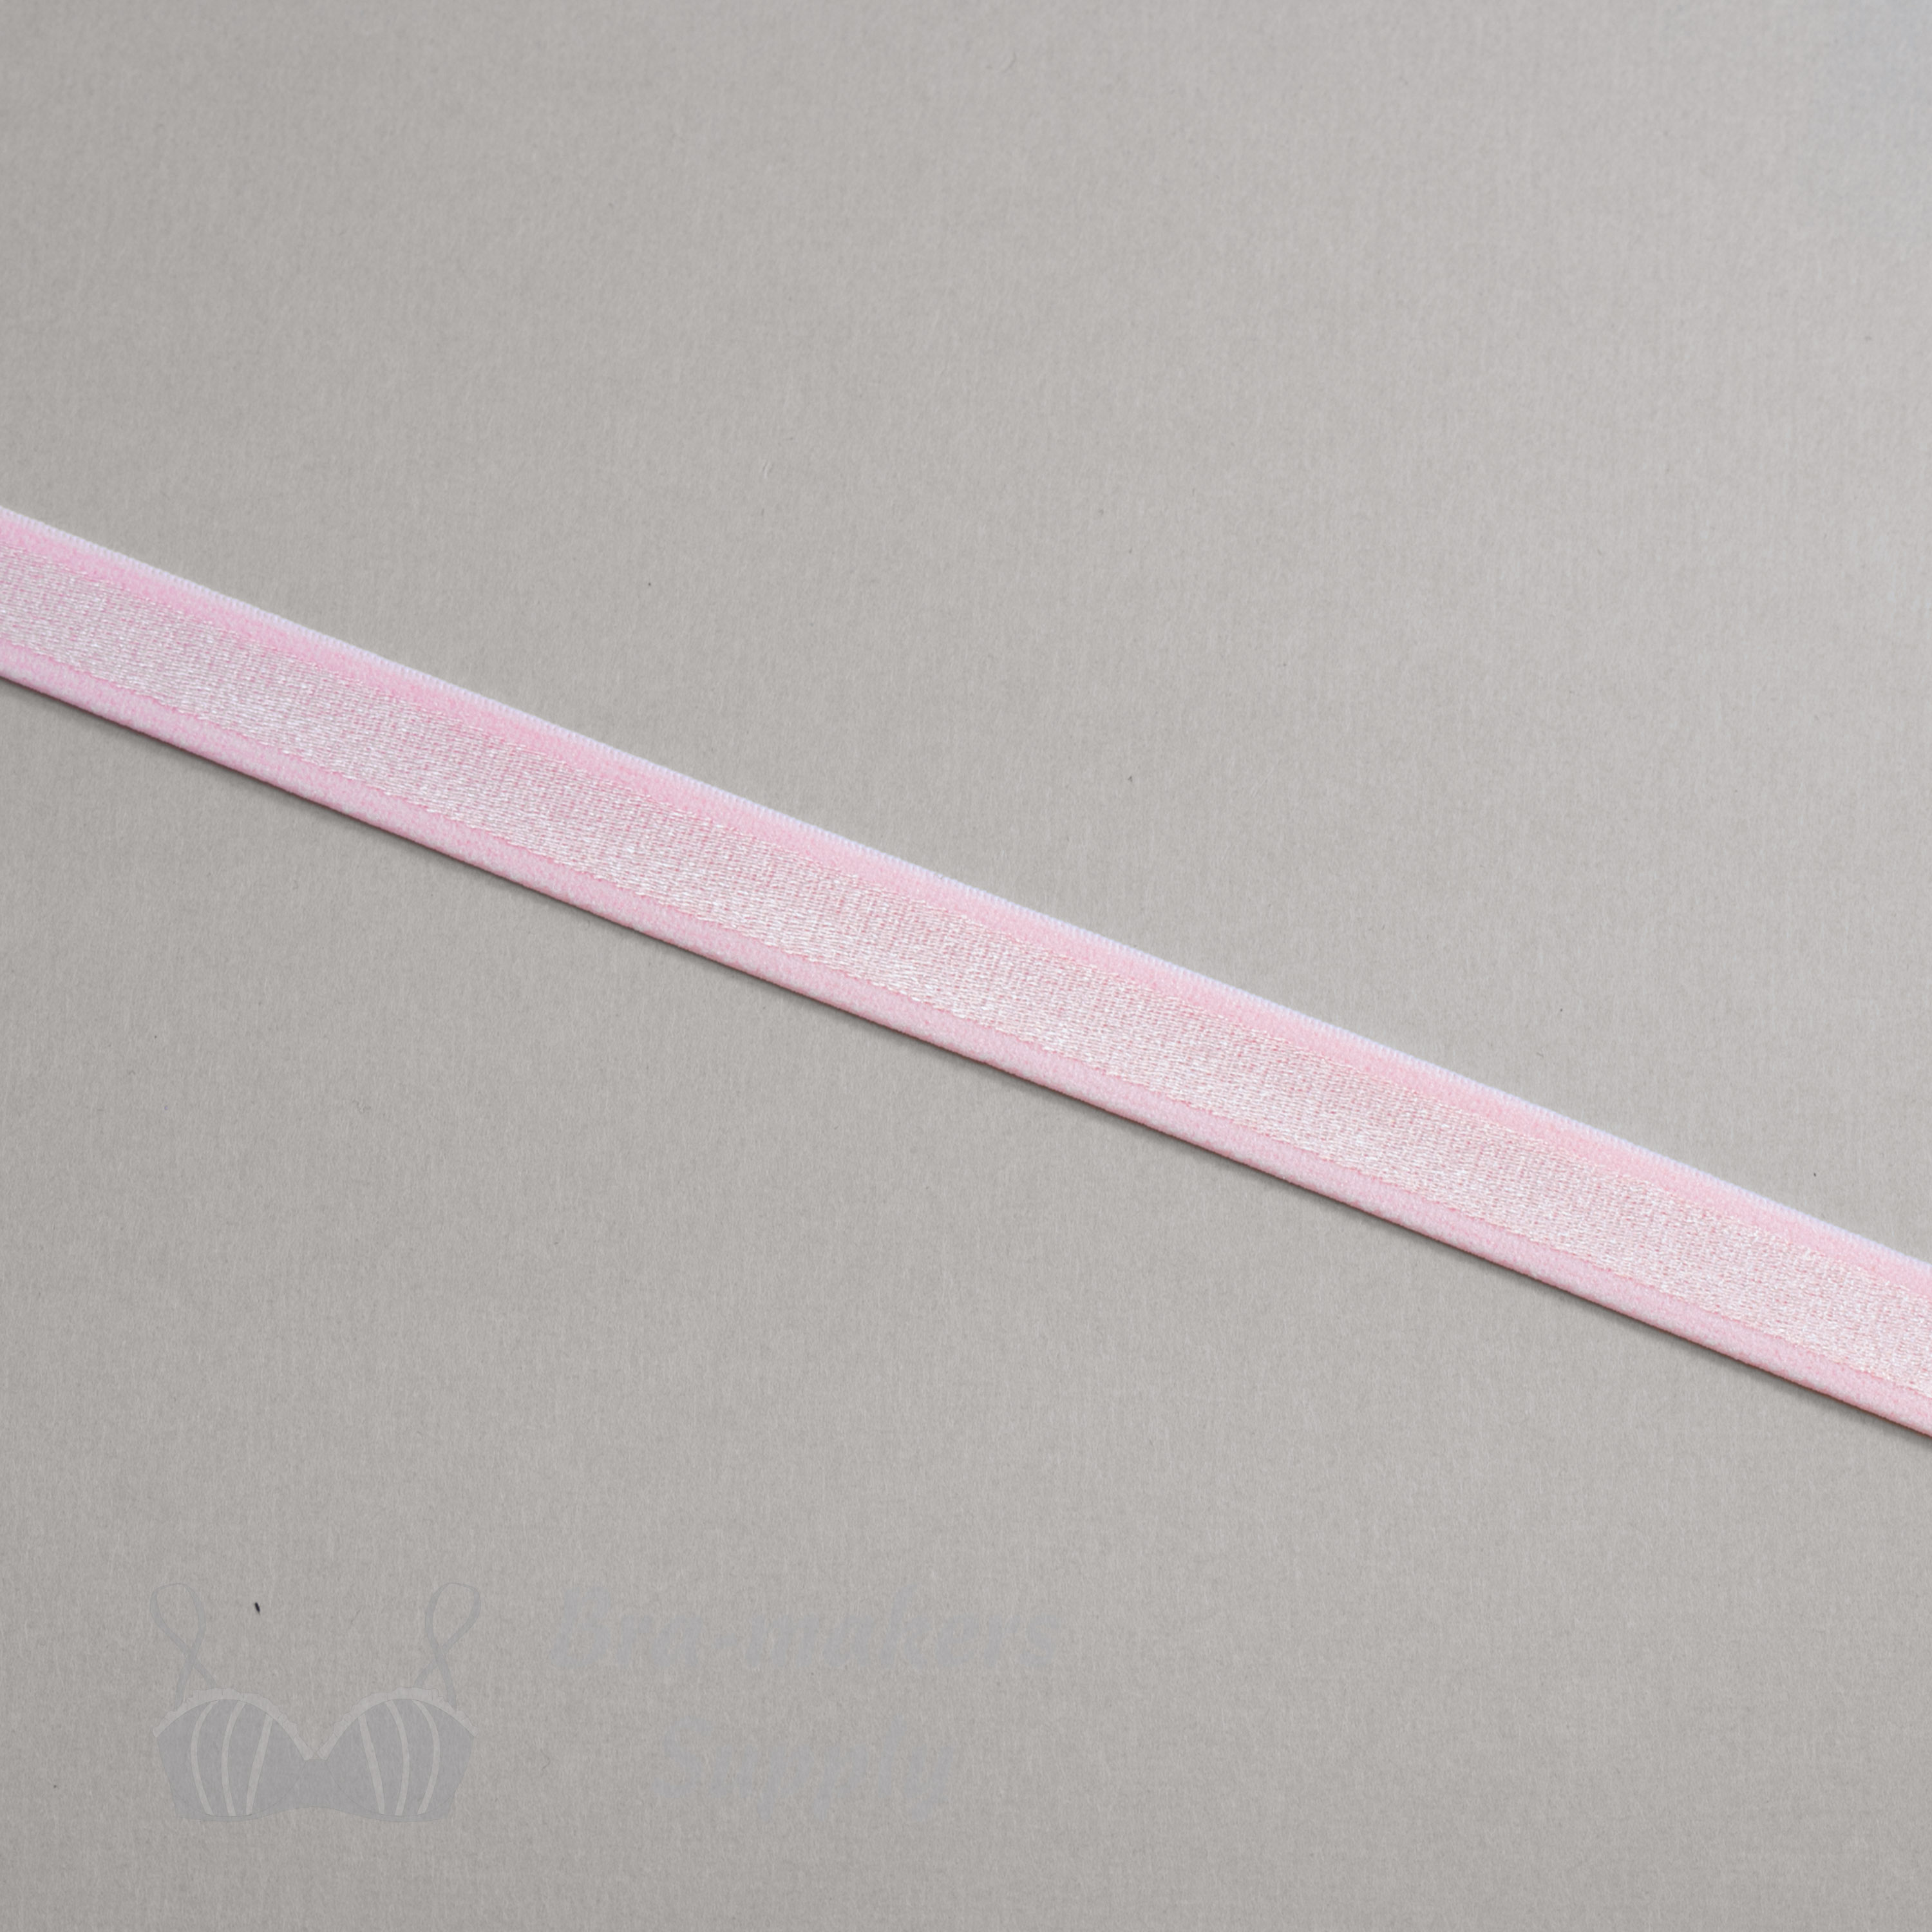 Light Pink Satin Ribbon Bra Straps - 3/8 or 10mm wide - Bra Making  Lingerie DIY - 1 Pair/2 Pieces 